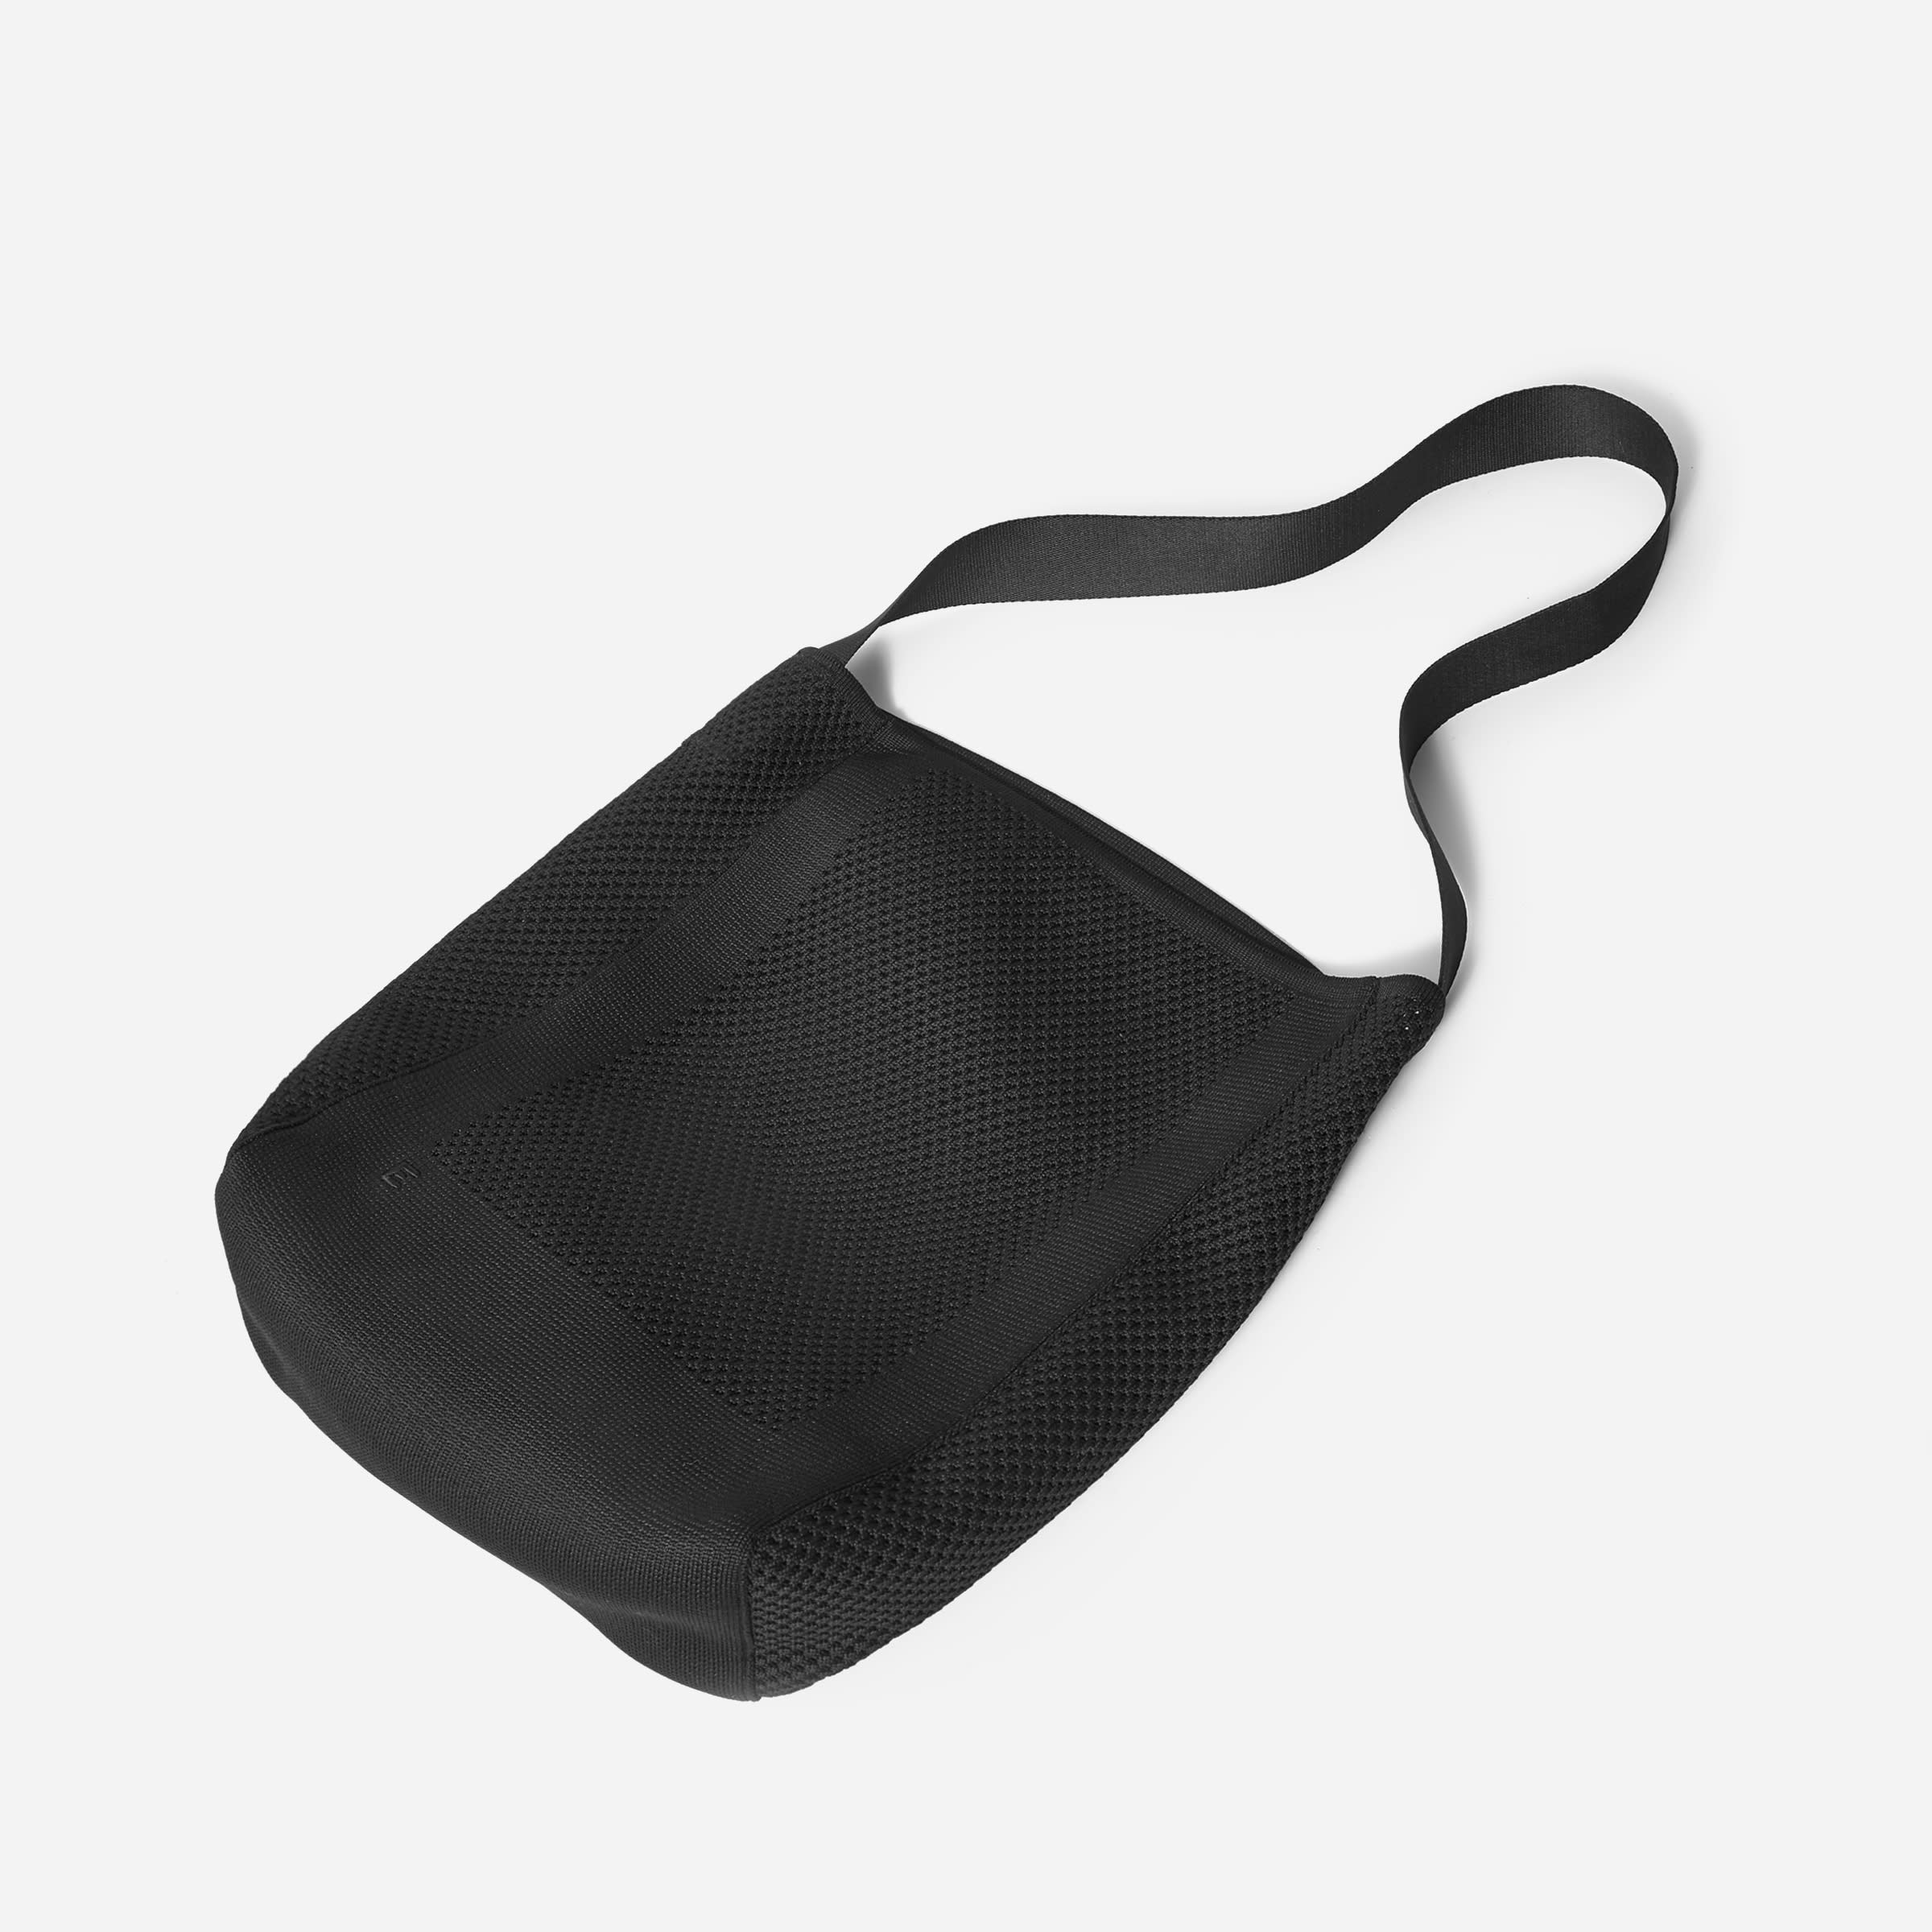 Team Dark Tote Bag for Sale by raivenn8